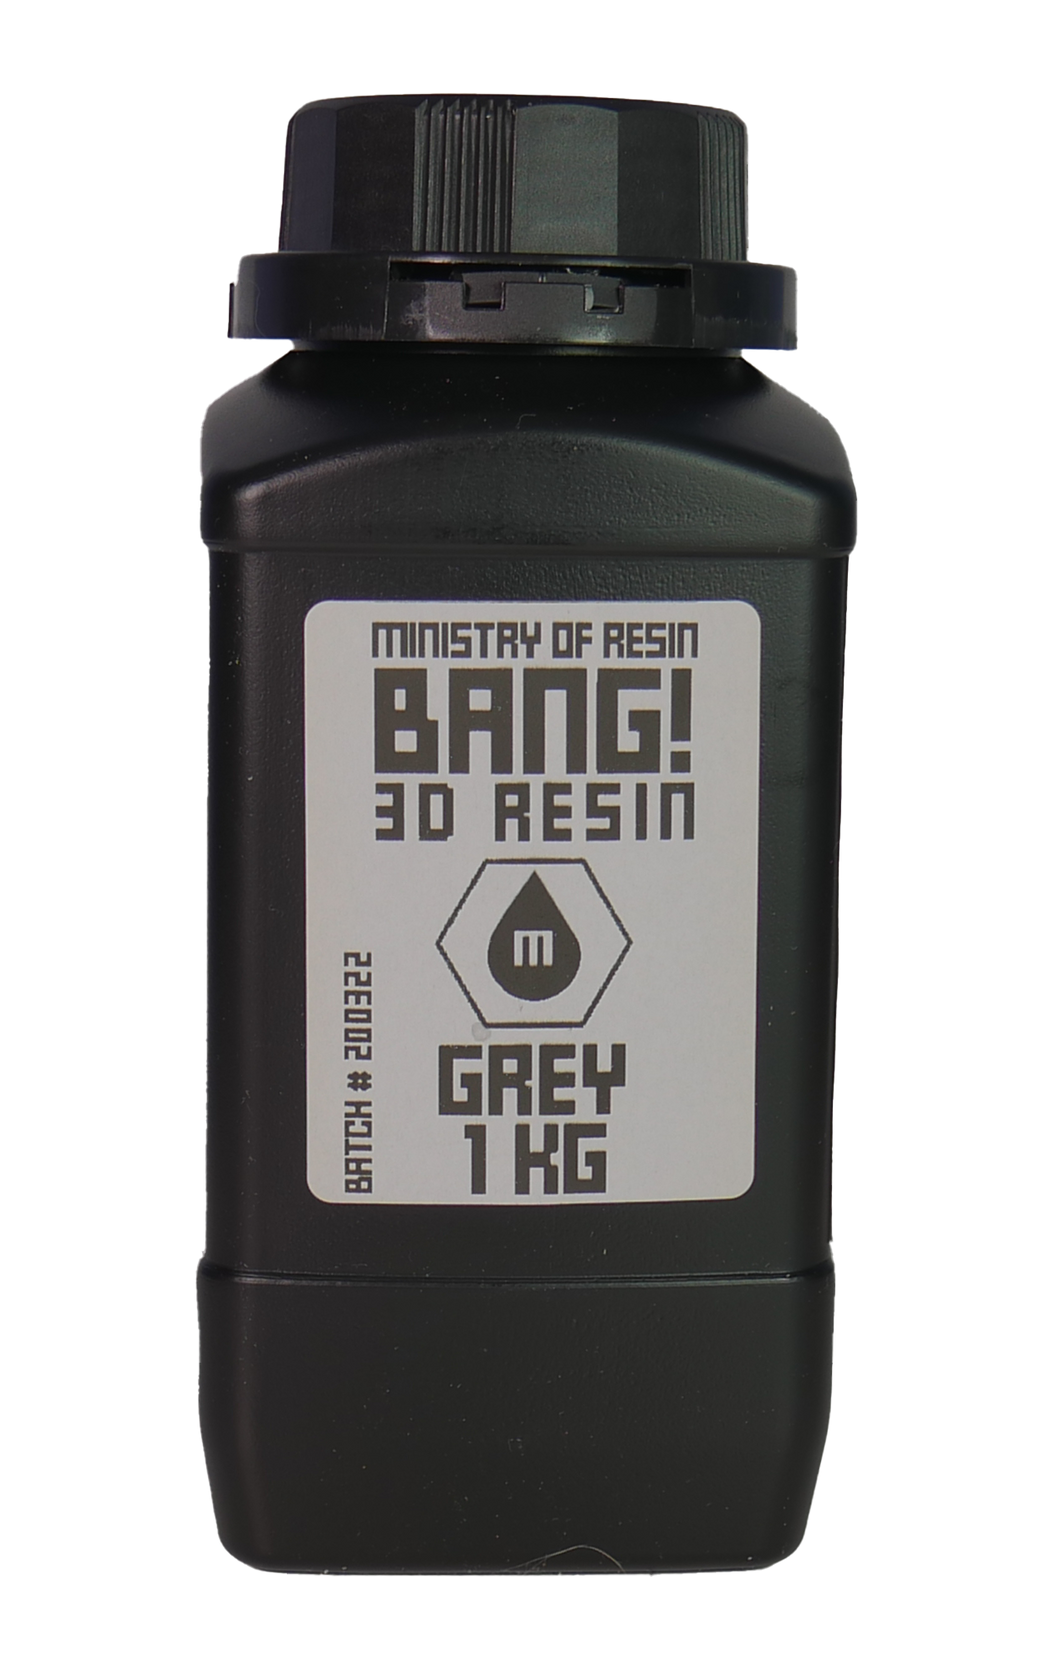 Bang! Impact Resistant LCD 3D Resin 1kg Bottle